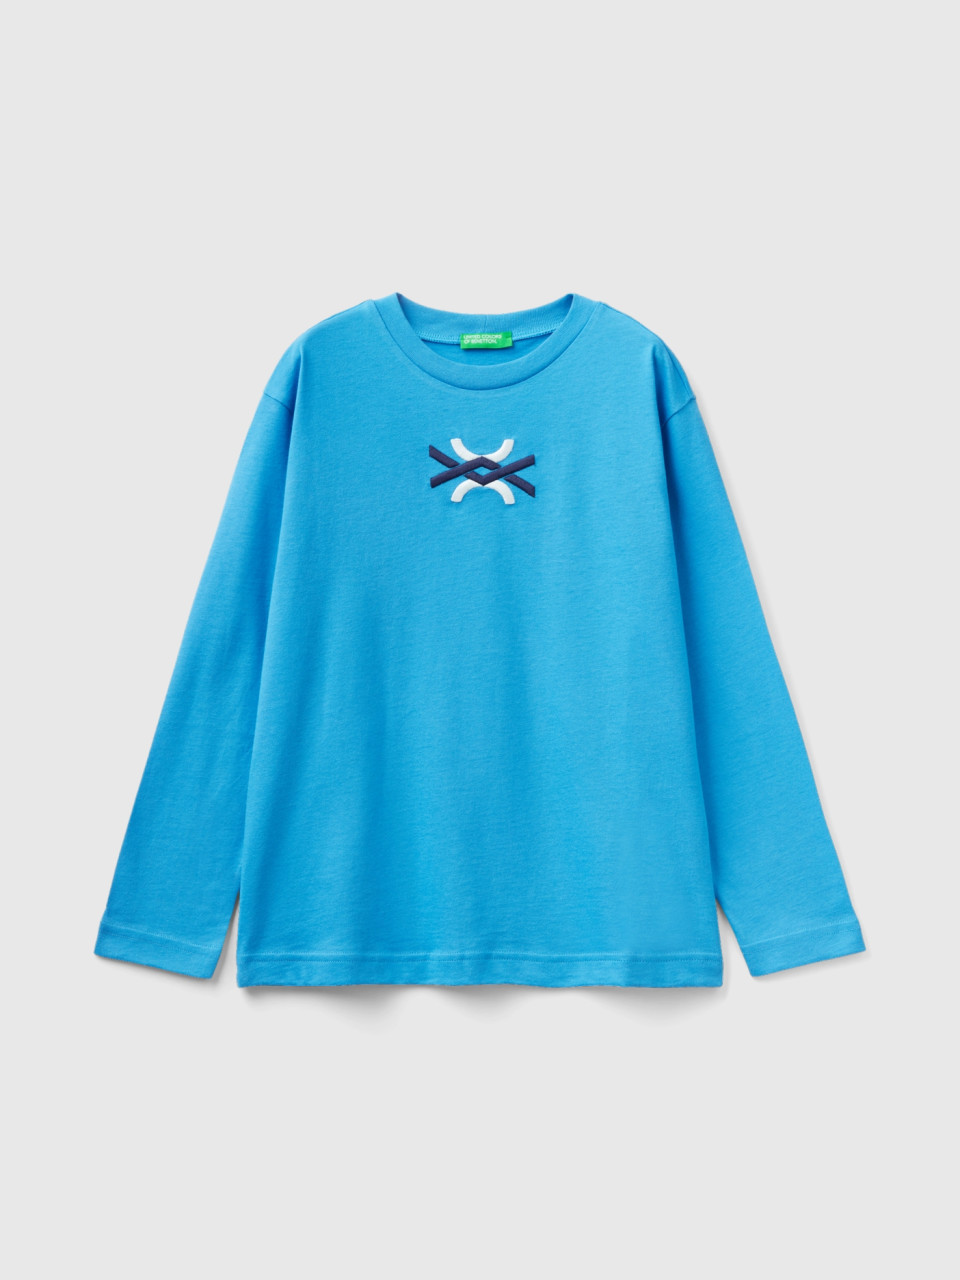 Benetton, Warm 100% Organic Cotton T-shirt, Blue, Kids